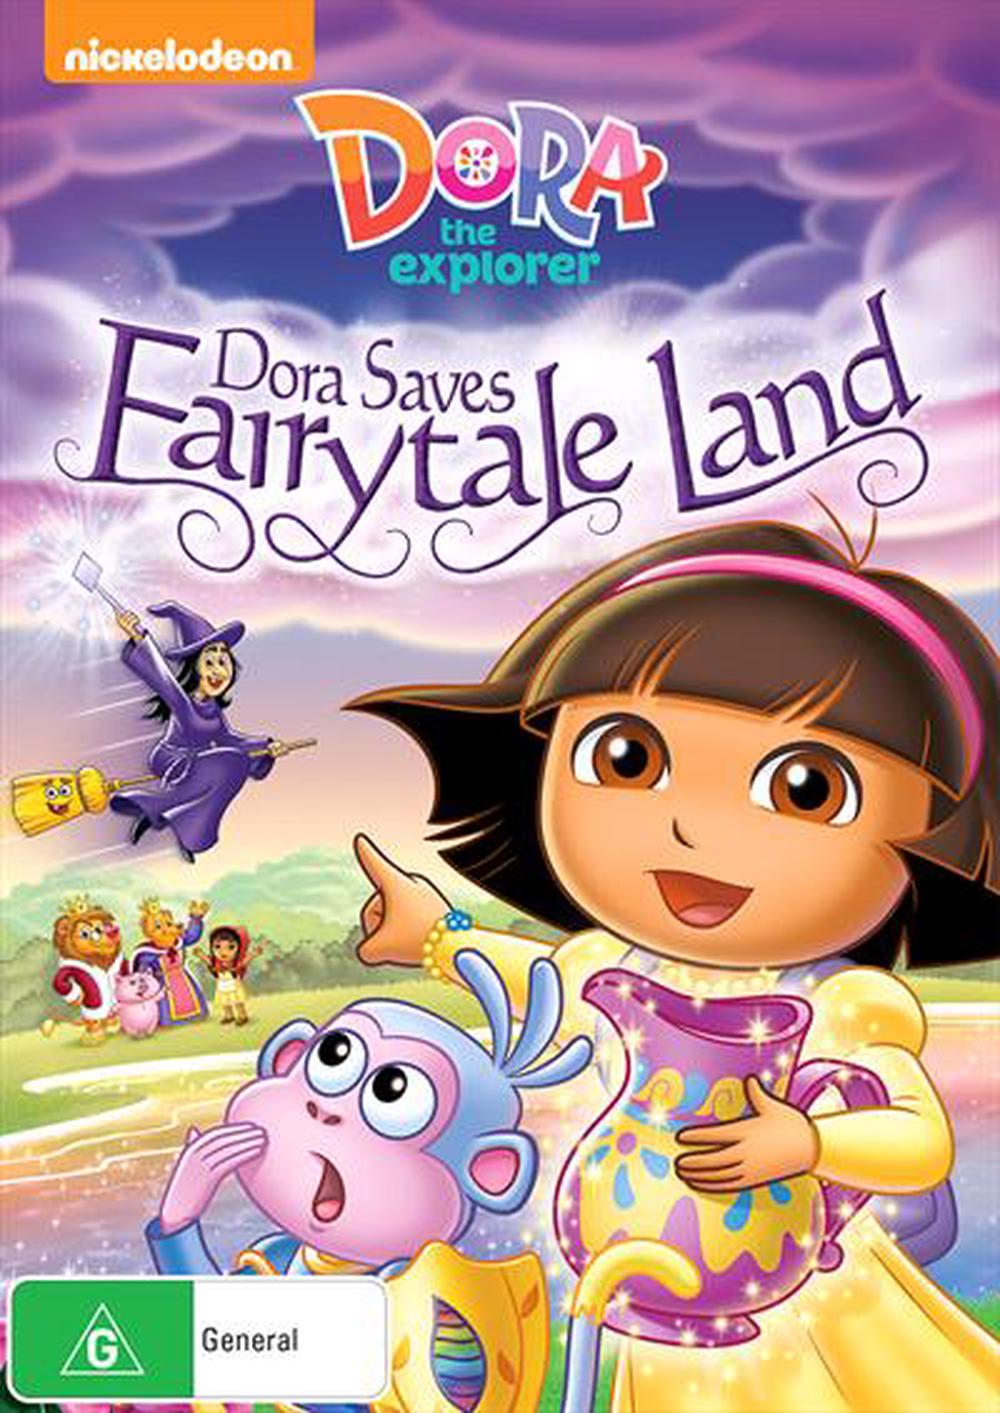 Dora The Explorer Saves Fairytale Land DVD Buy Online At Nile.